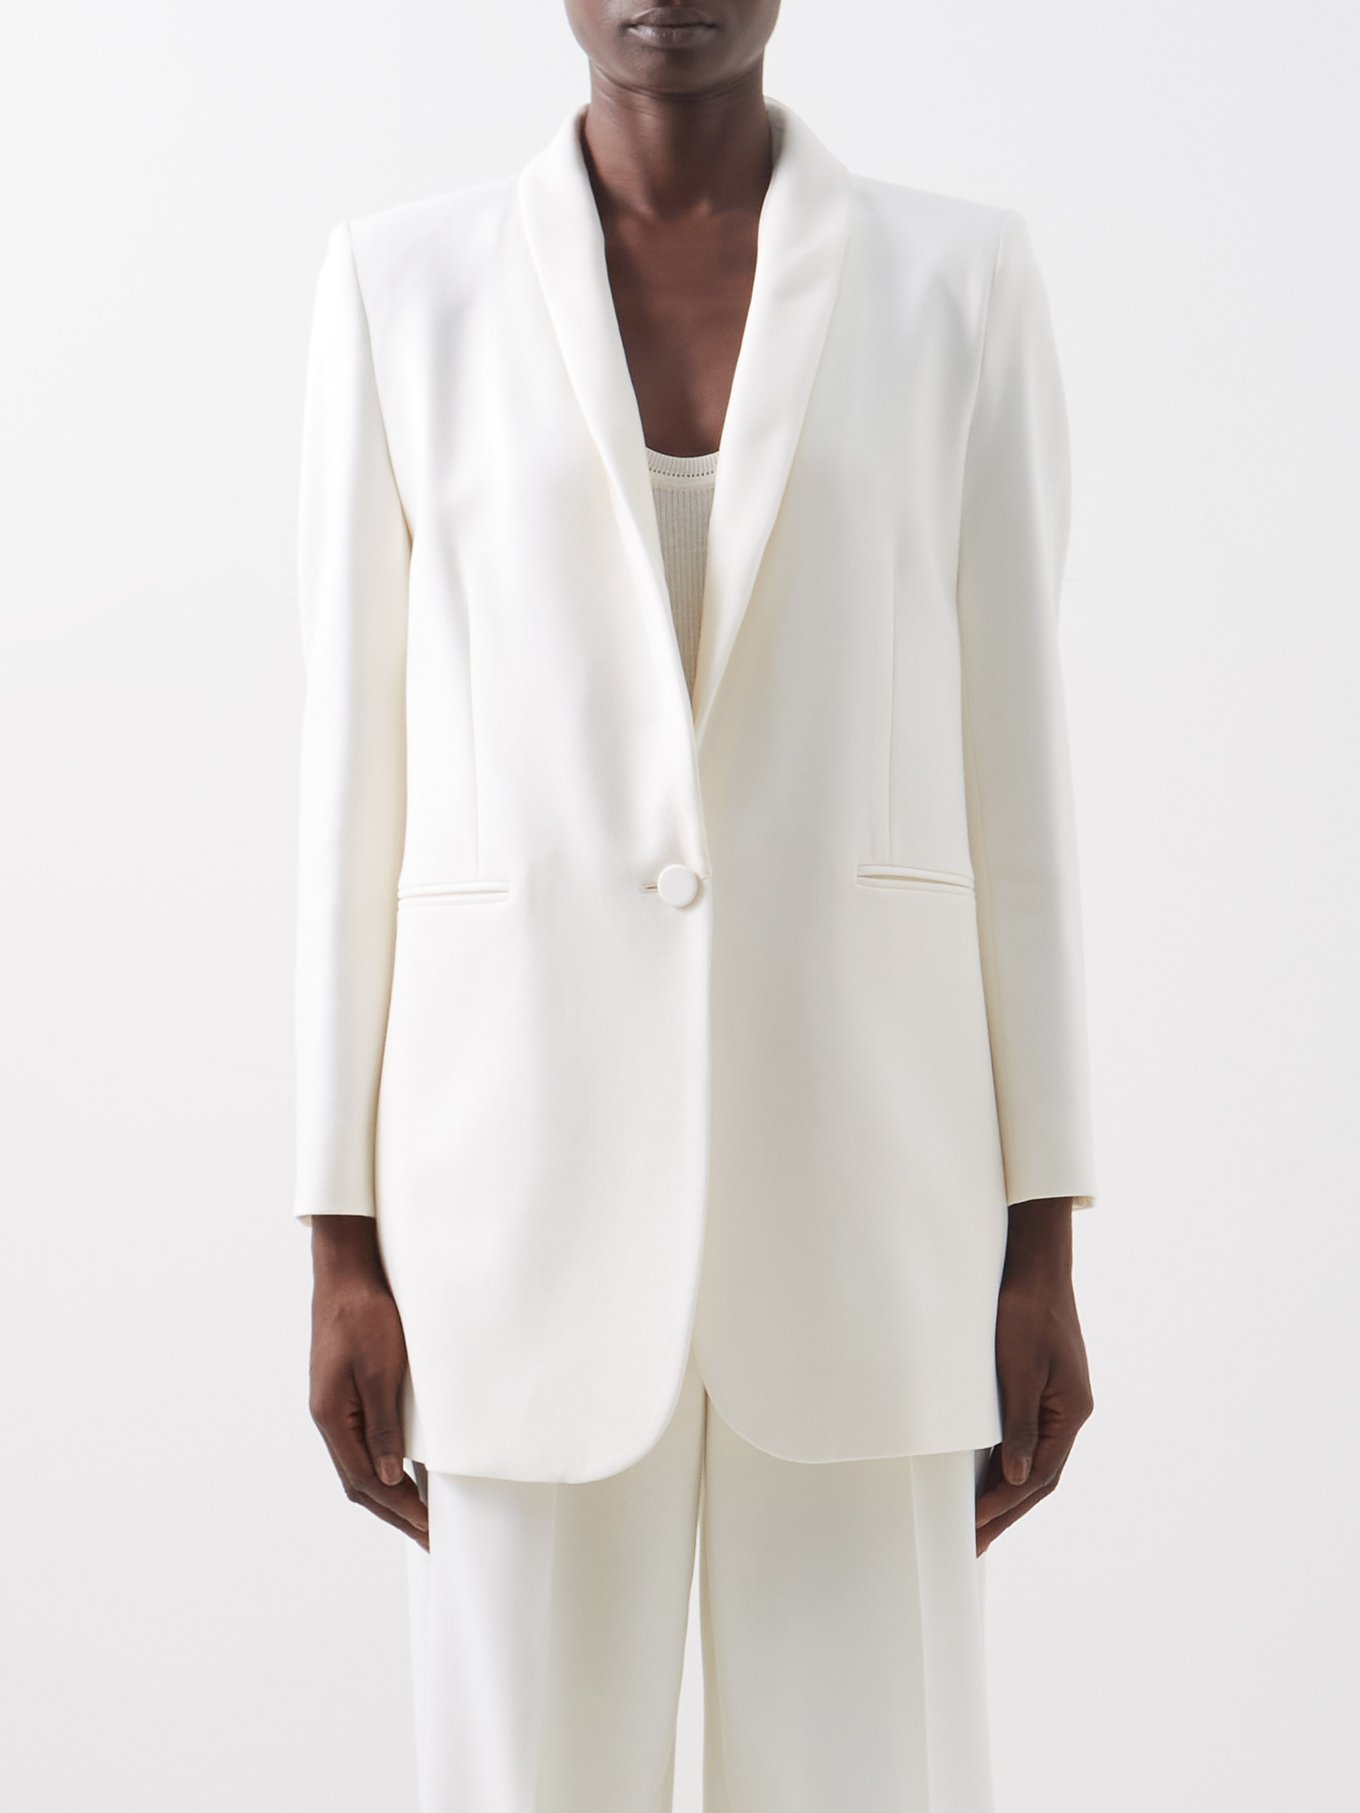 White linen 3-button midi Skirt Suit with shawl lapels